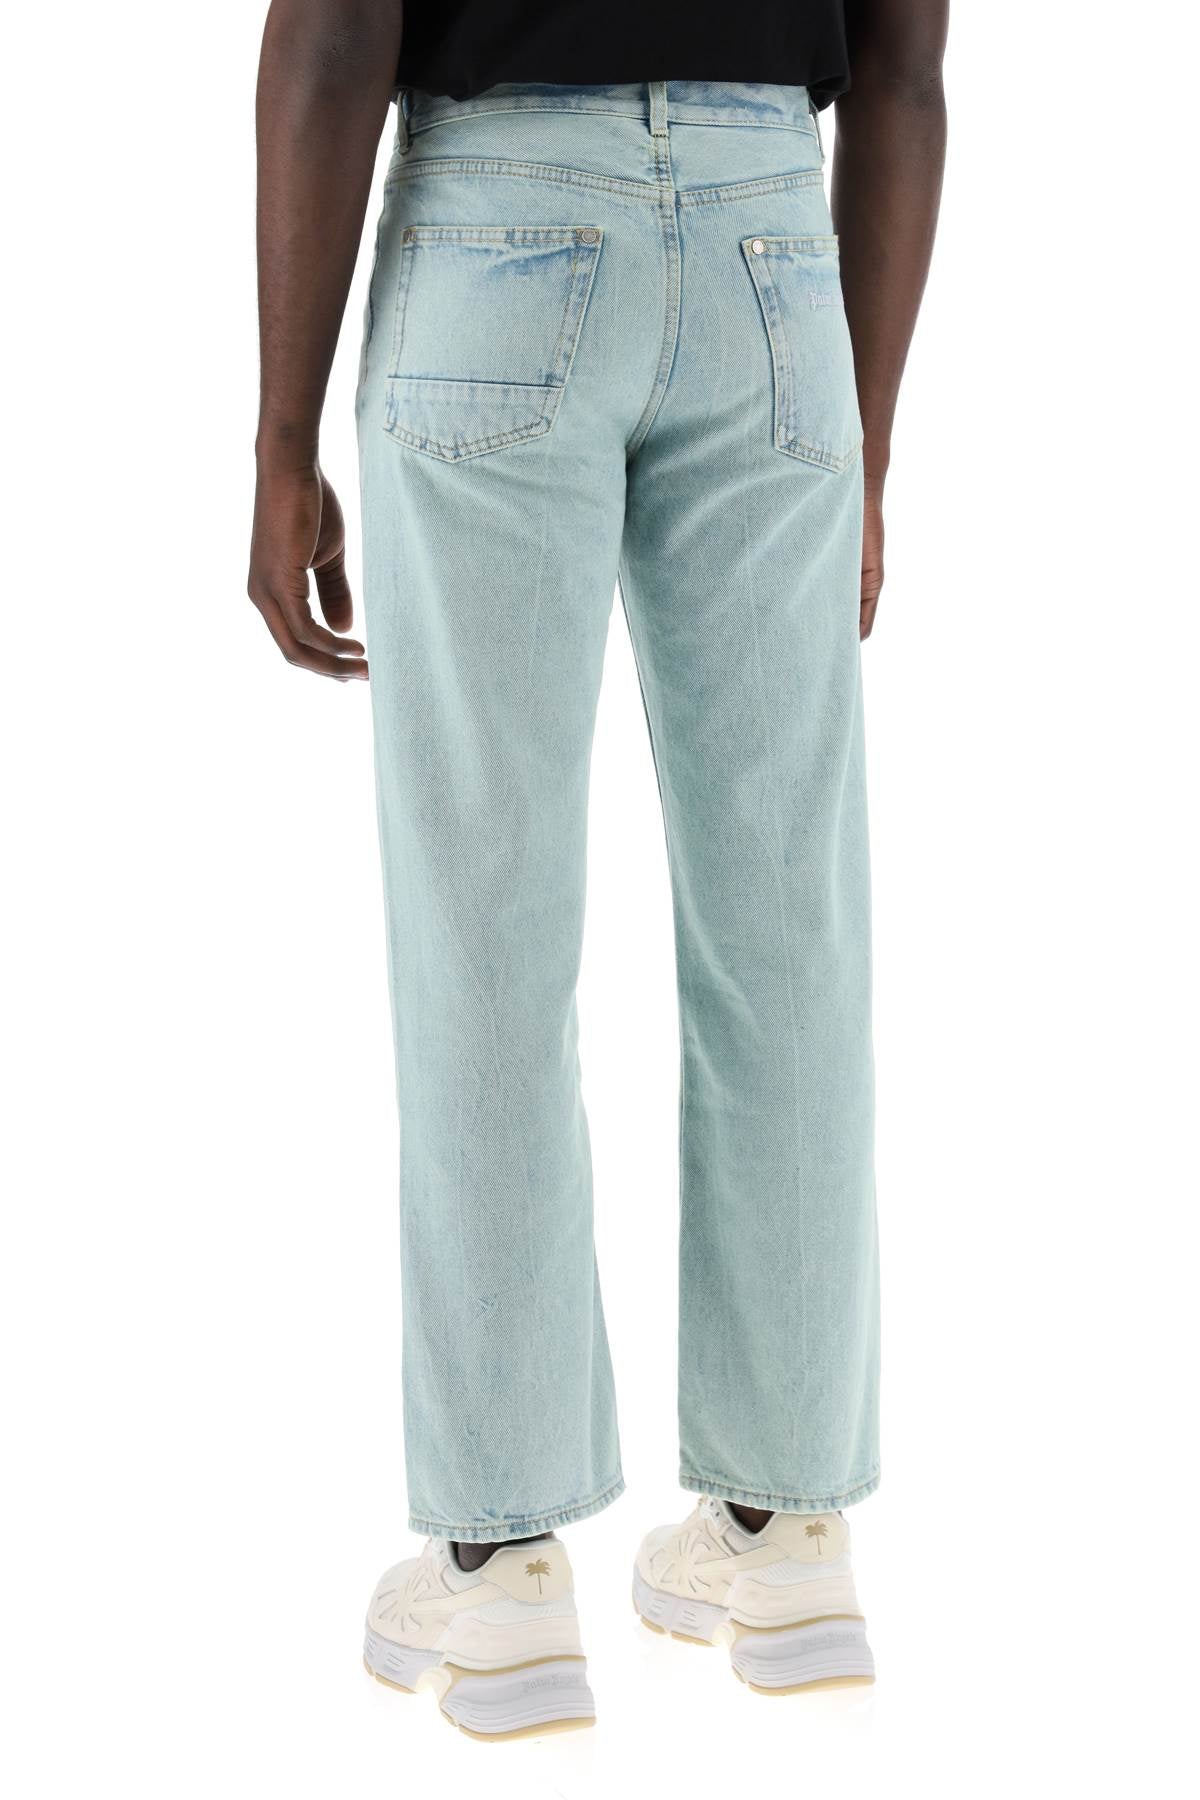 PALM ANGELS Men's Light Blue Straight Cotton Denim Jeans for Summer 2024